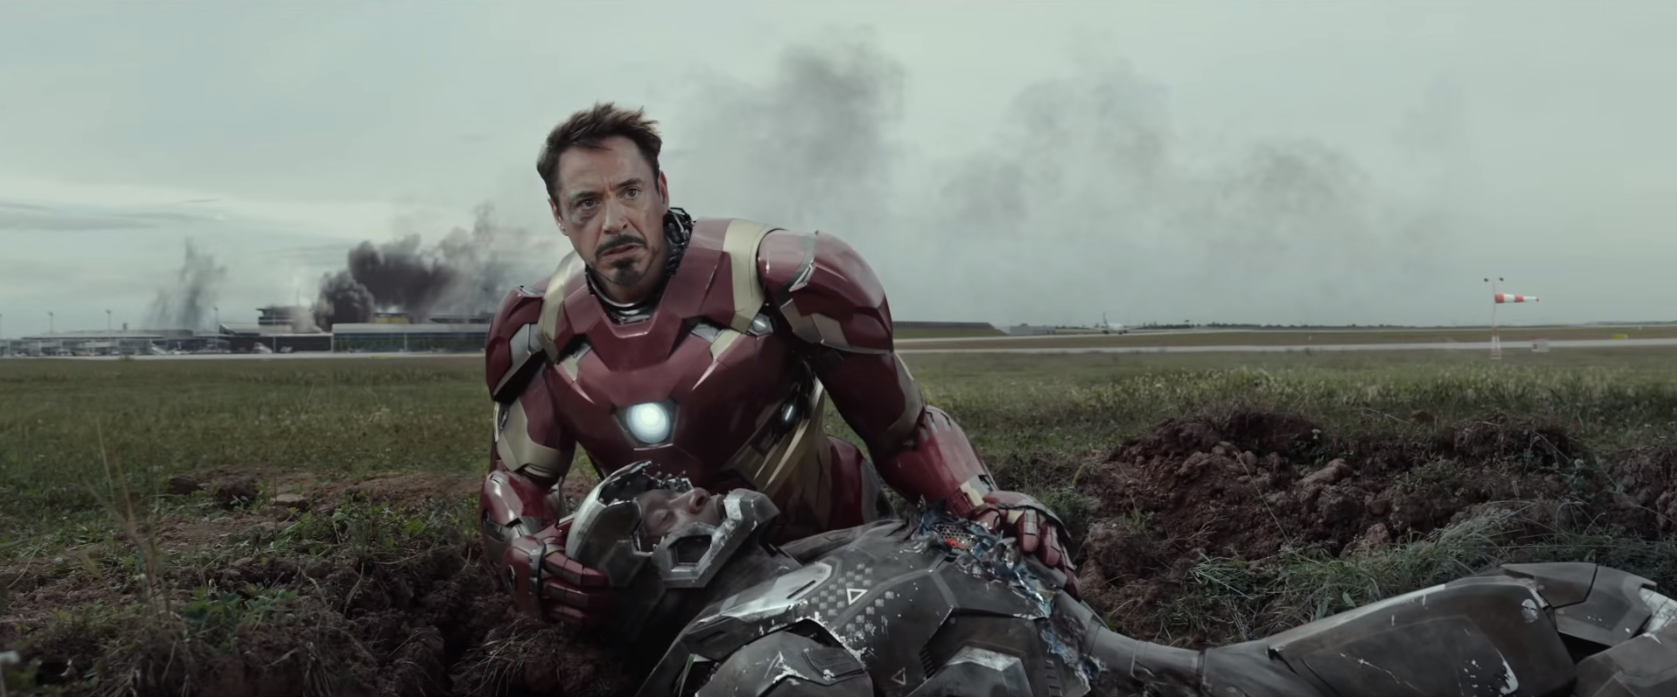 Tony Stark – James Rhodes